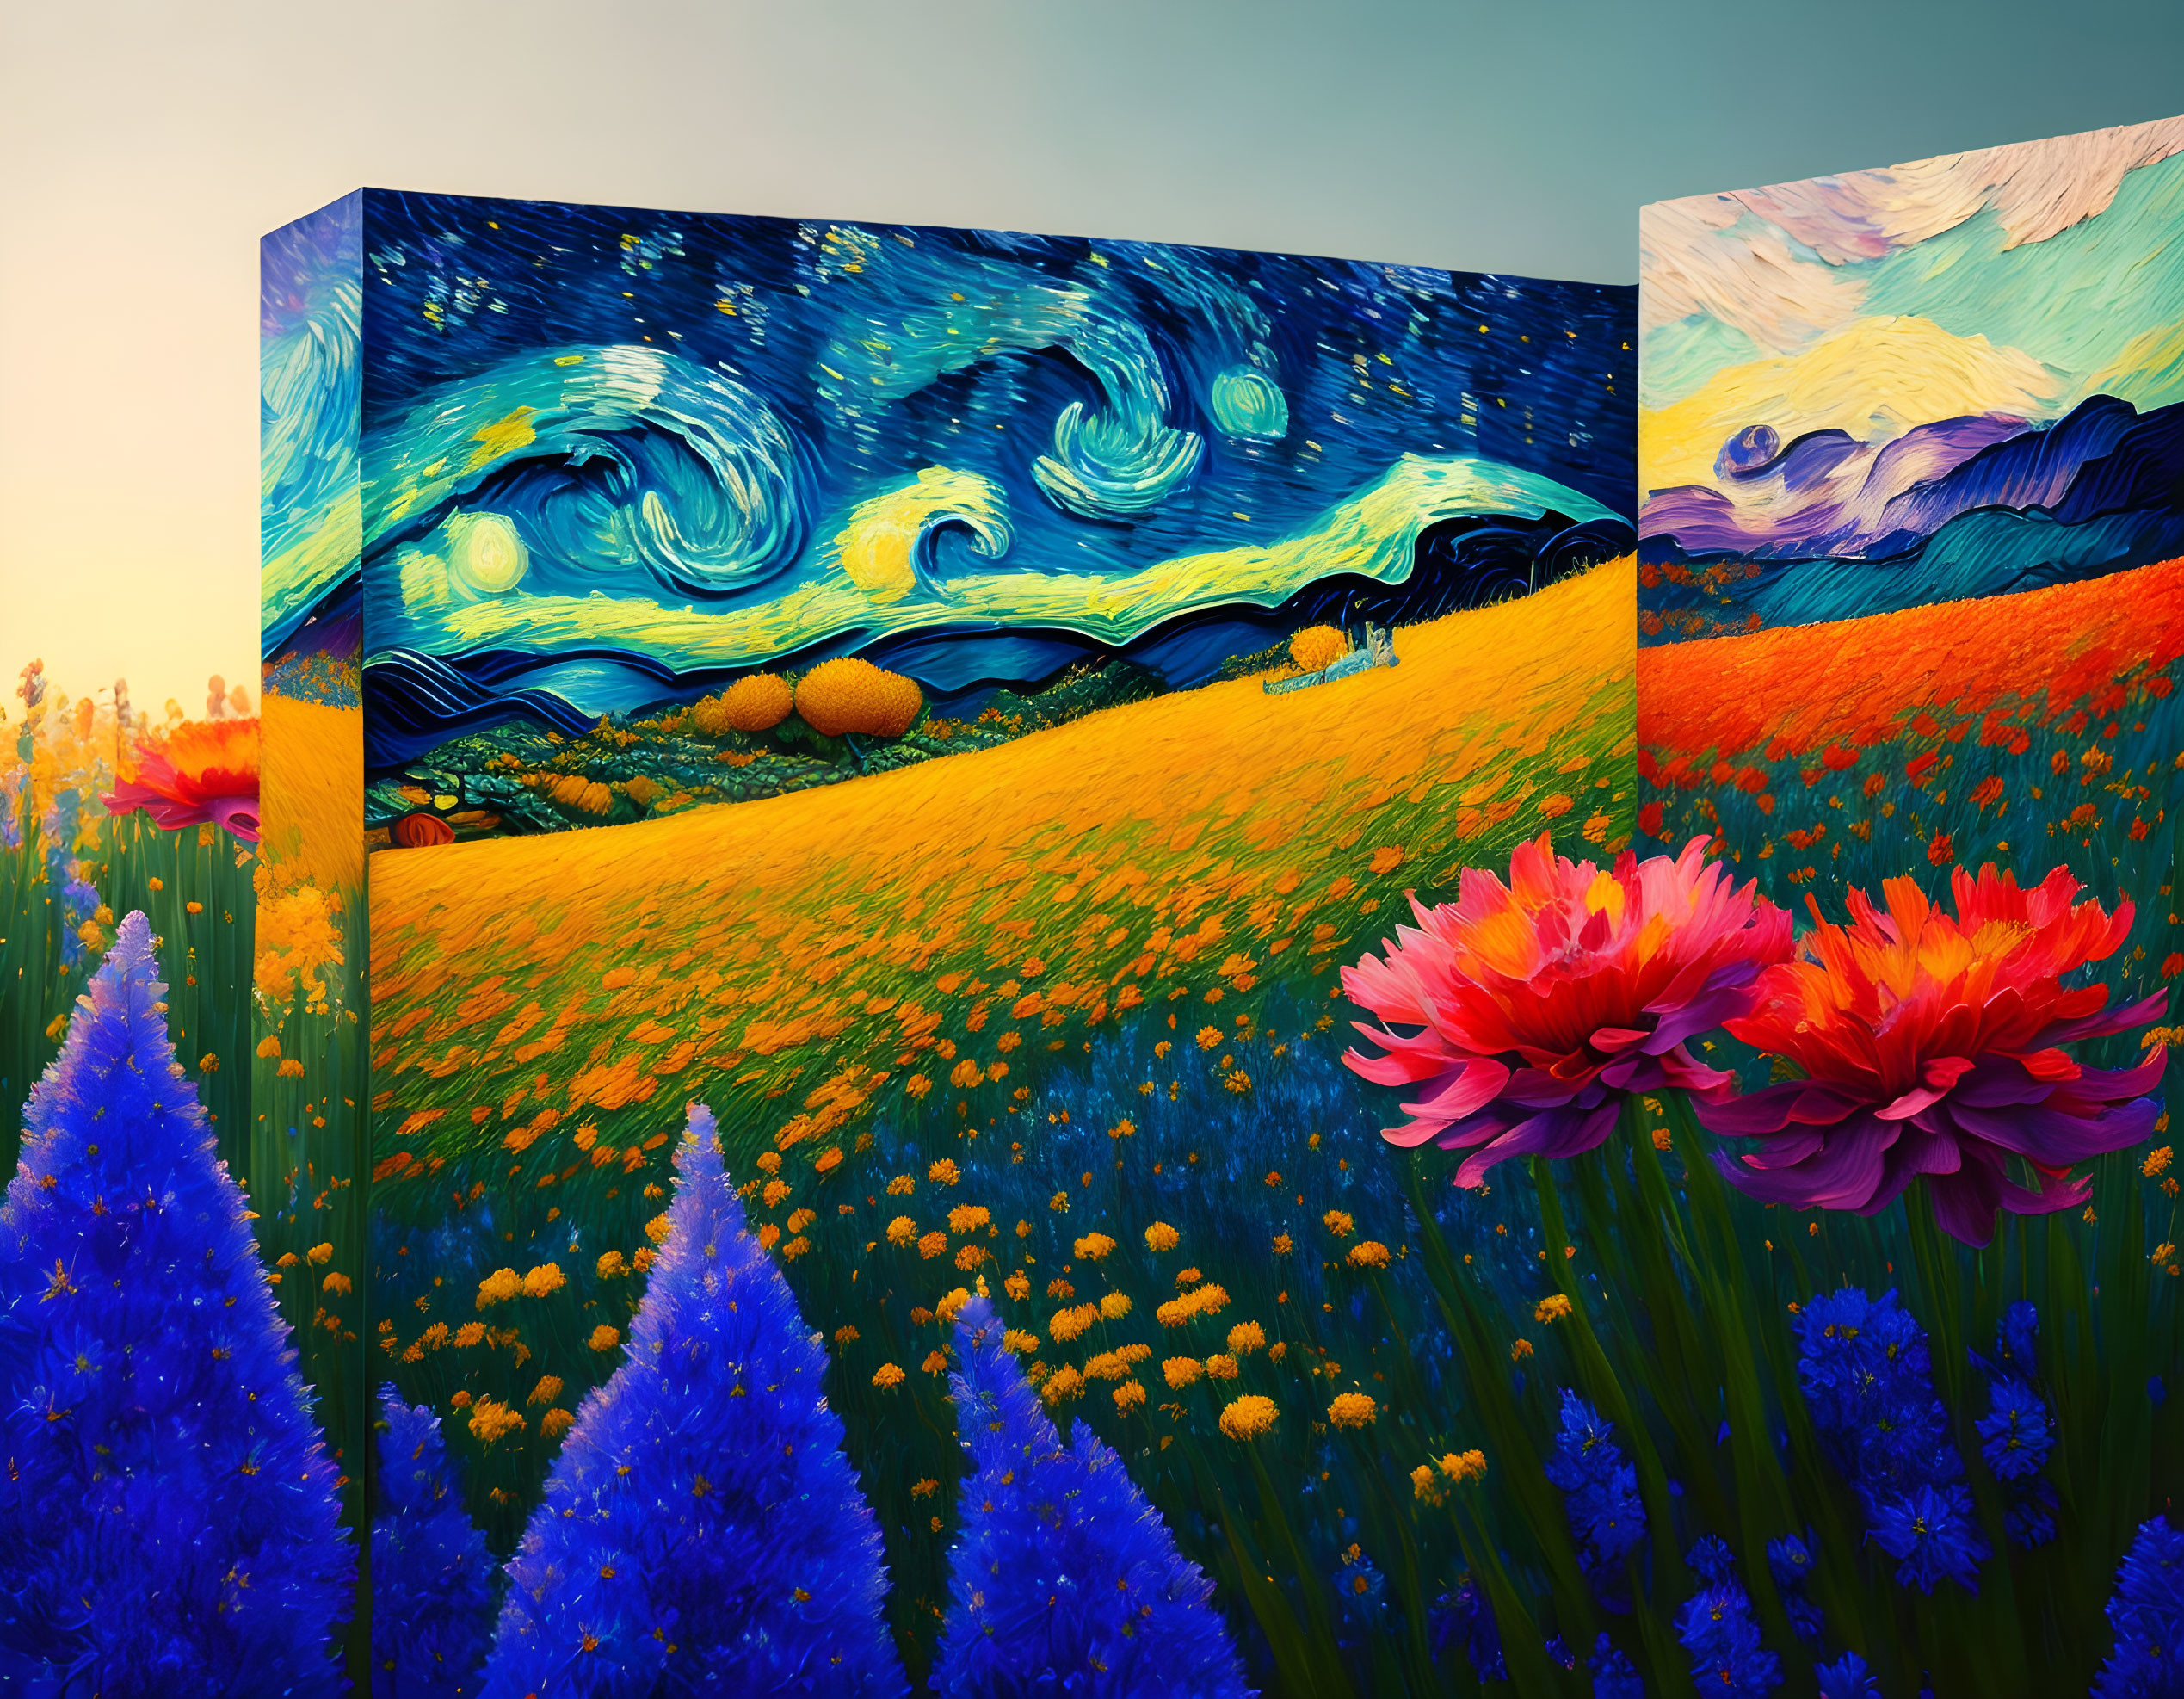 Colorful 3D art installation: Van Gogh's "Starry Night" above vibrant flower